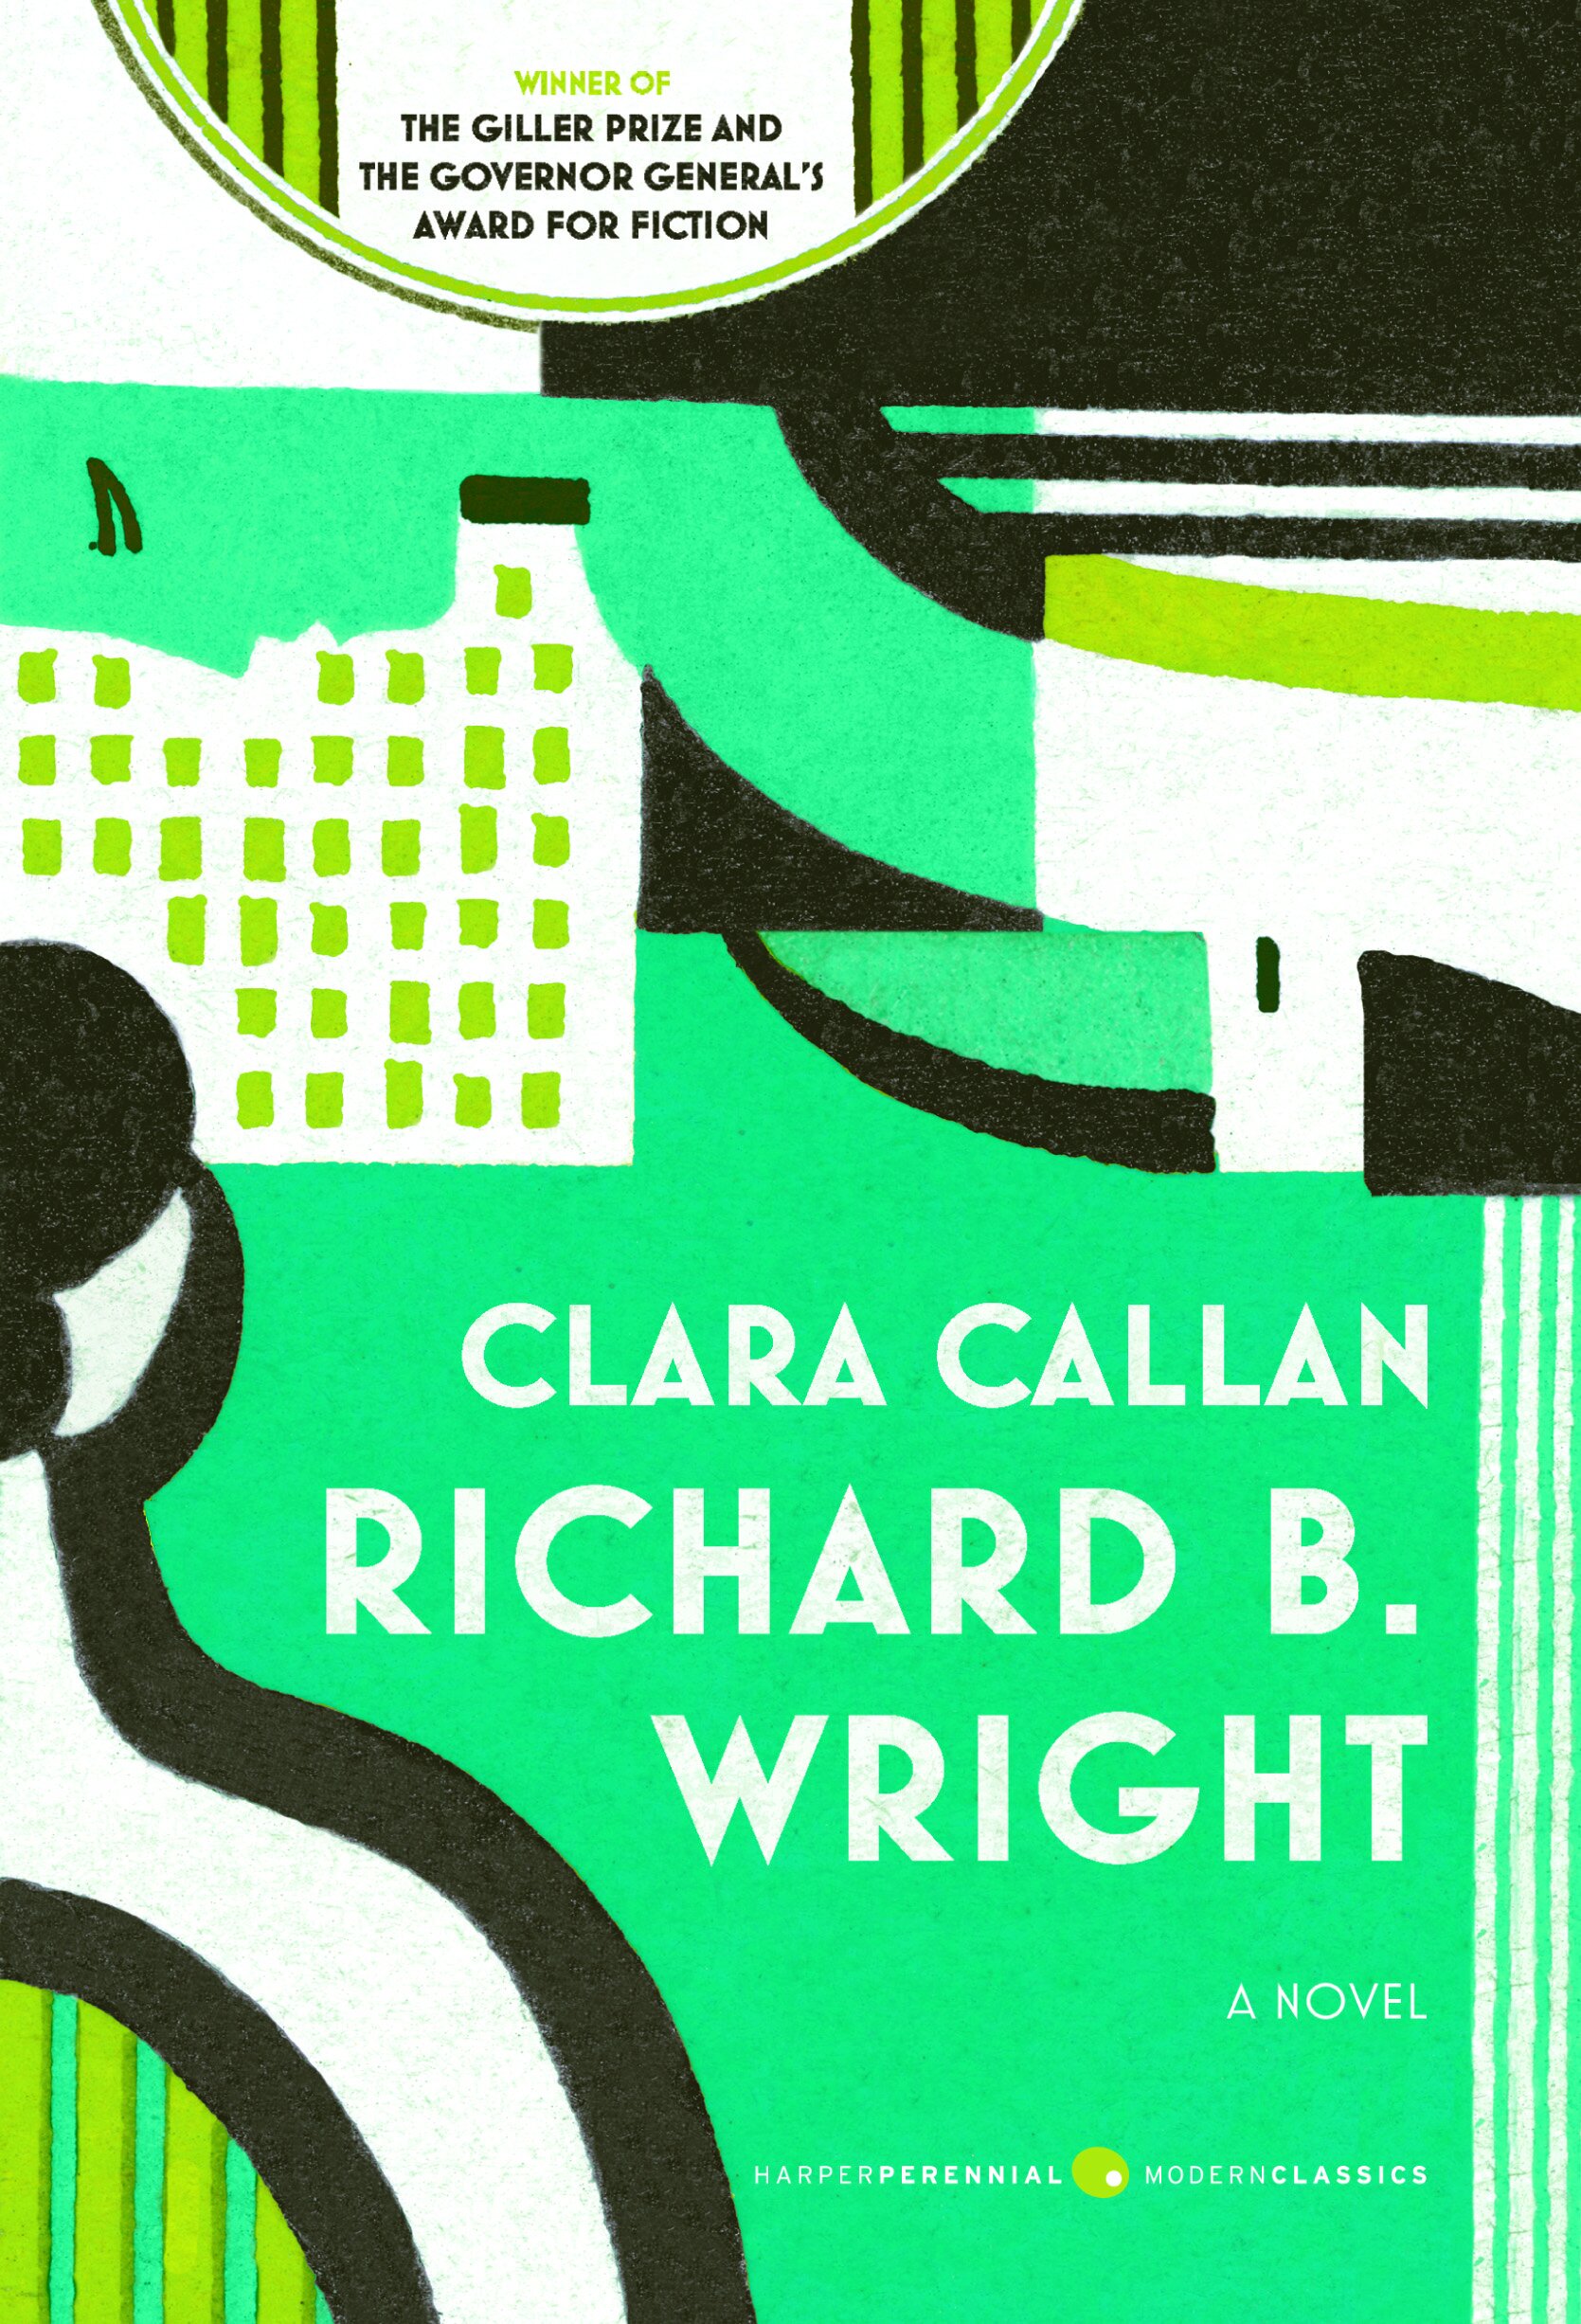 Wright, Richard - Clara Callan - Cdn pb cover HI-RES.jpg